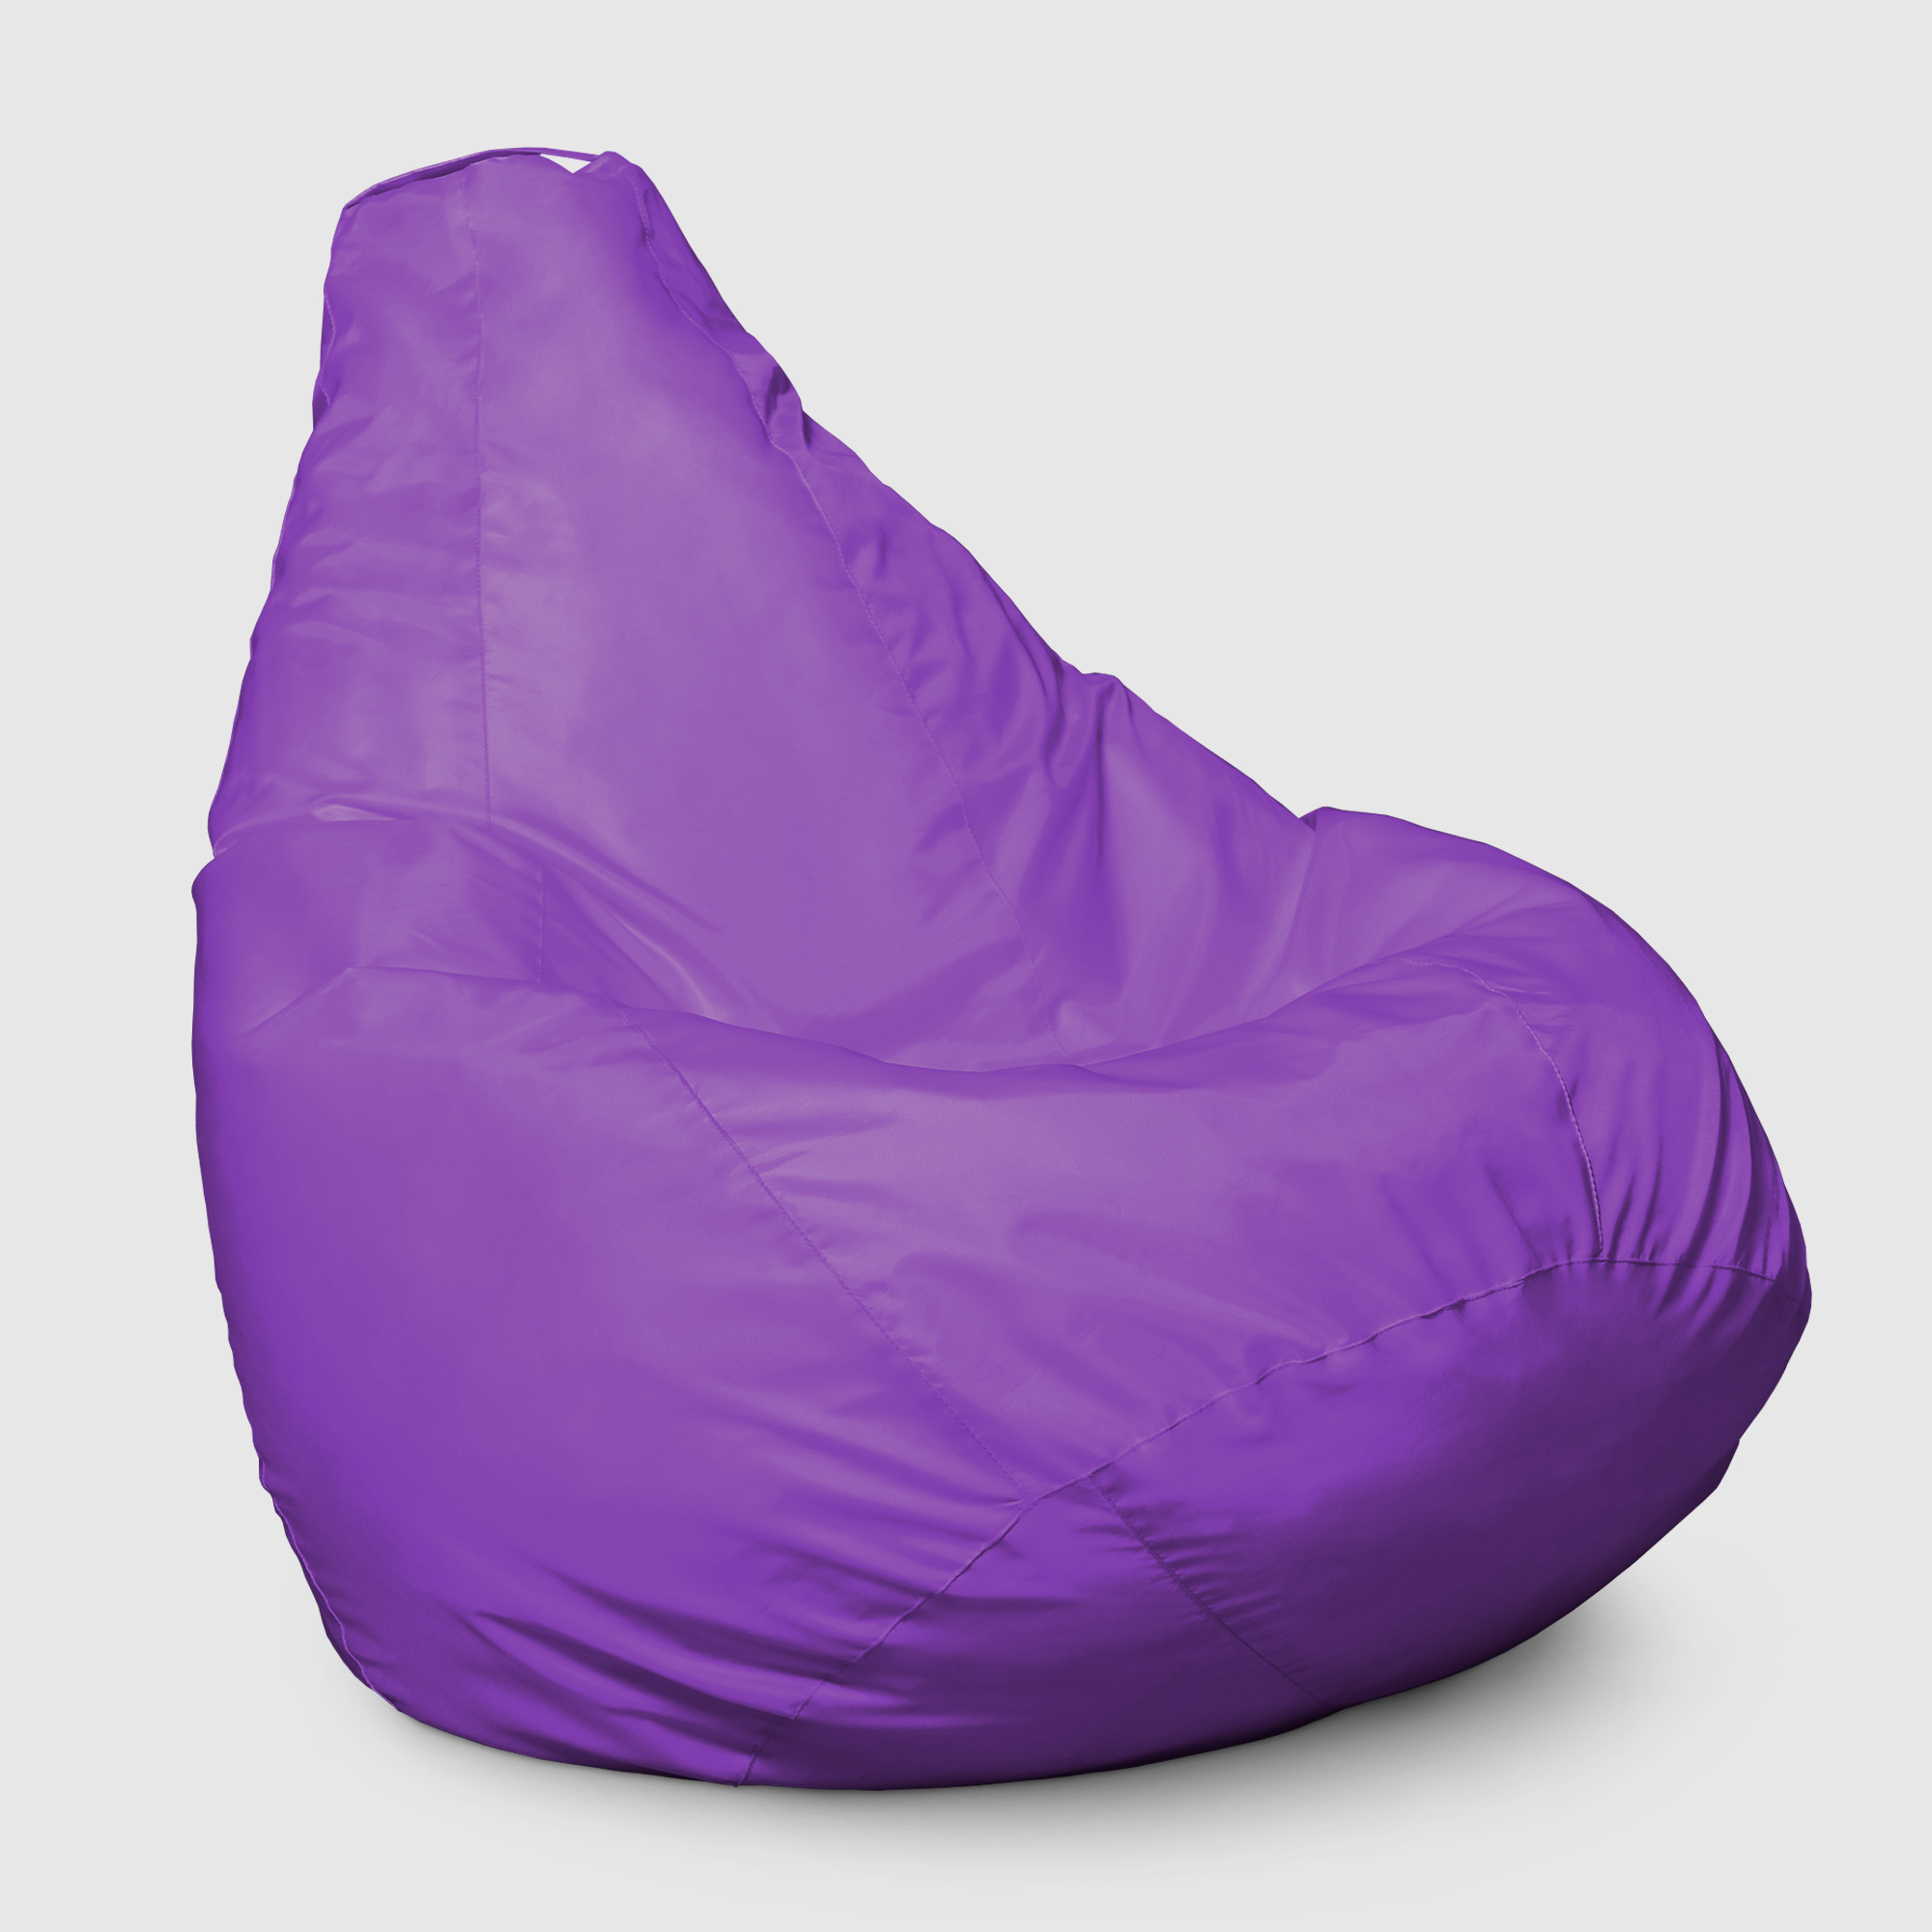 Кресло мешок Dreambag Меган xl фиолетовое 85х85х125 см кресло мешок dreambag меган xl синее 85х85х125 см